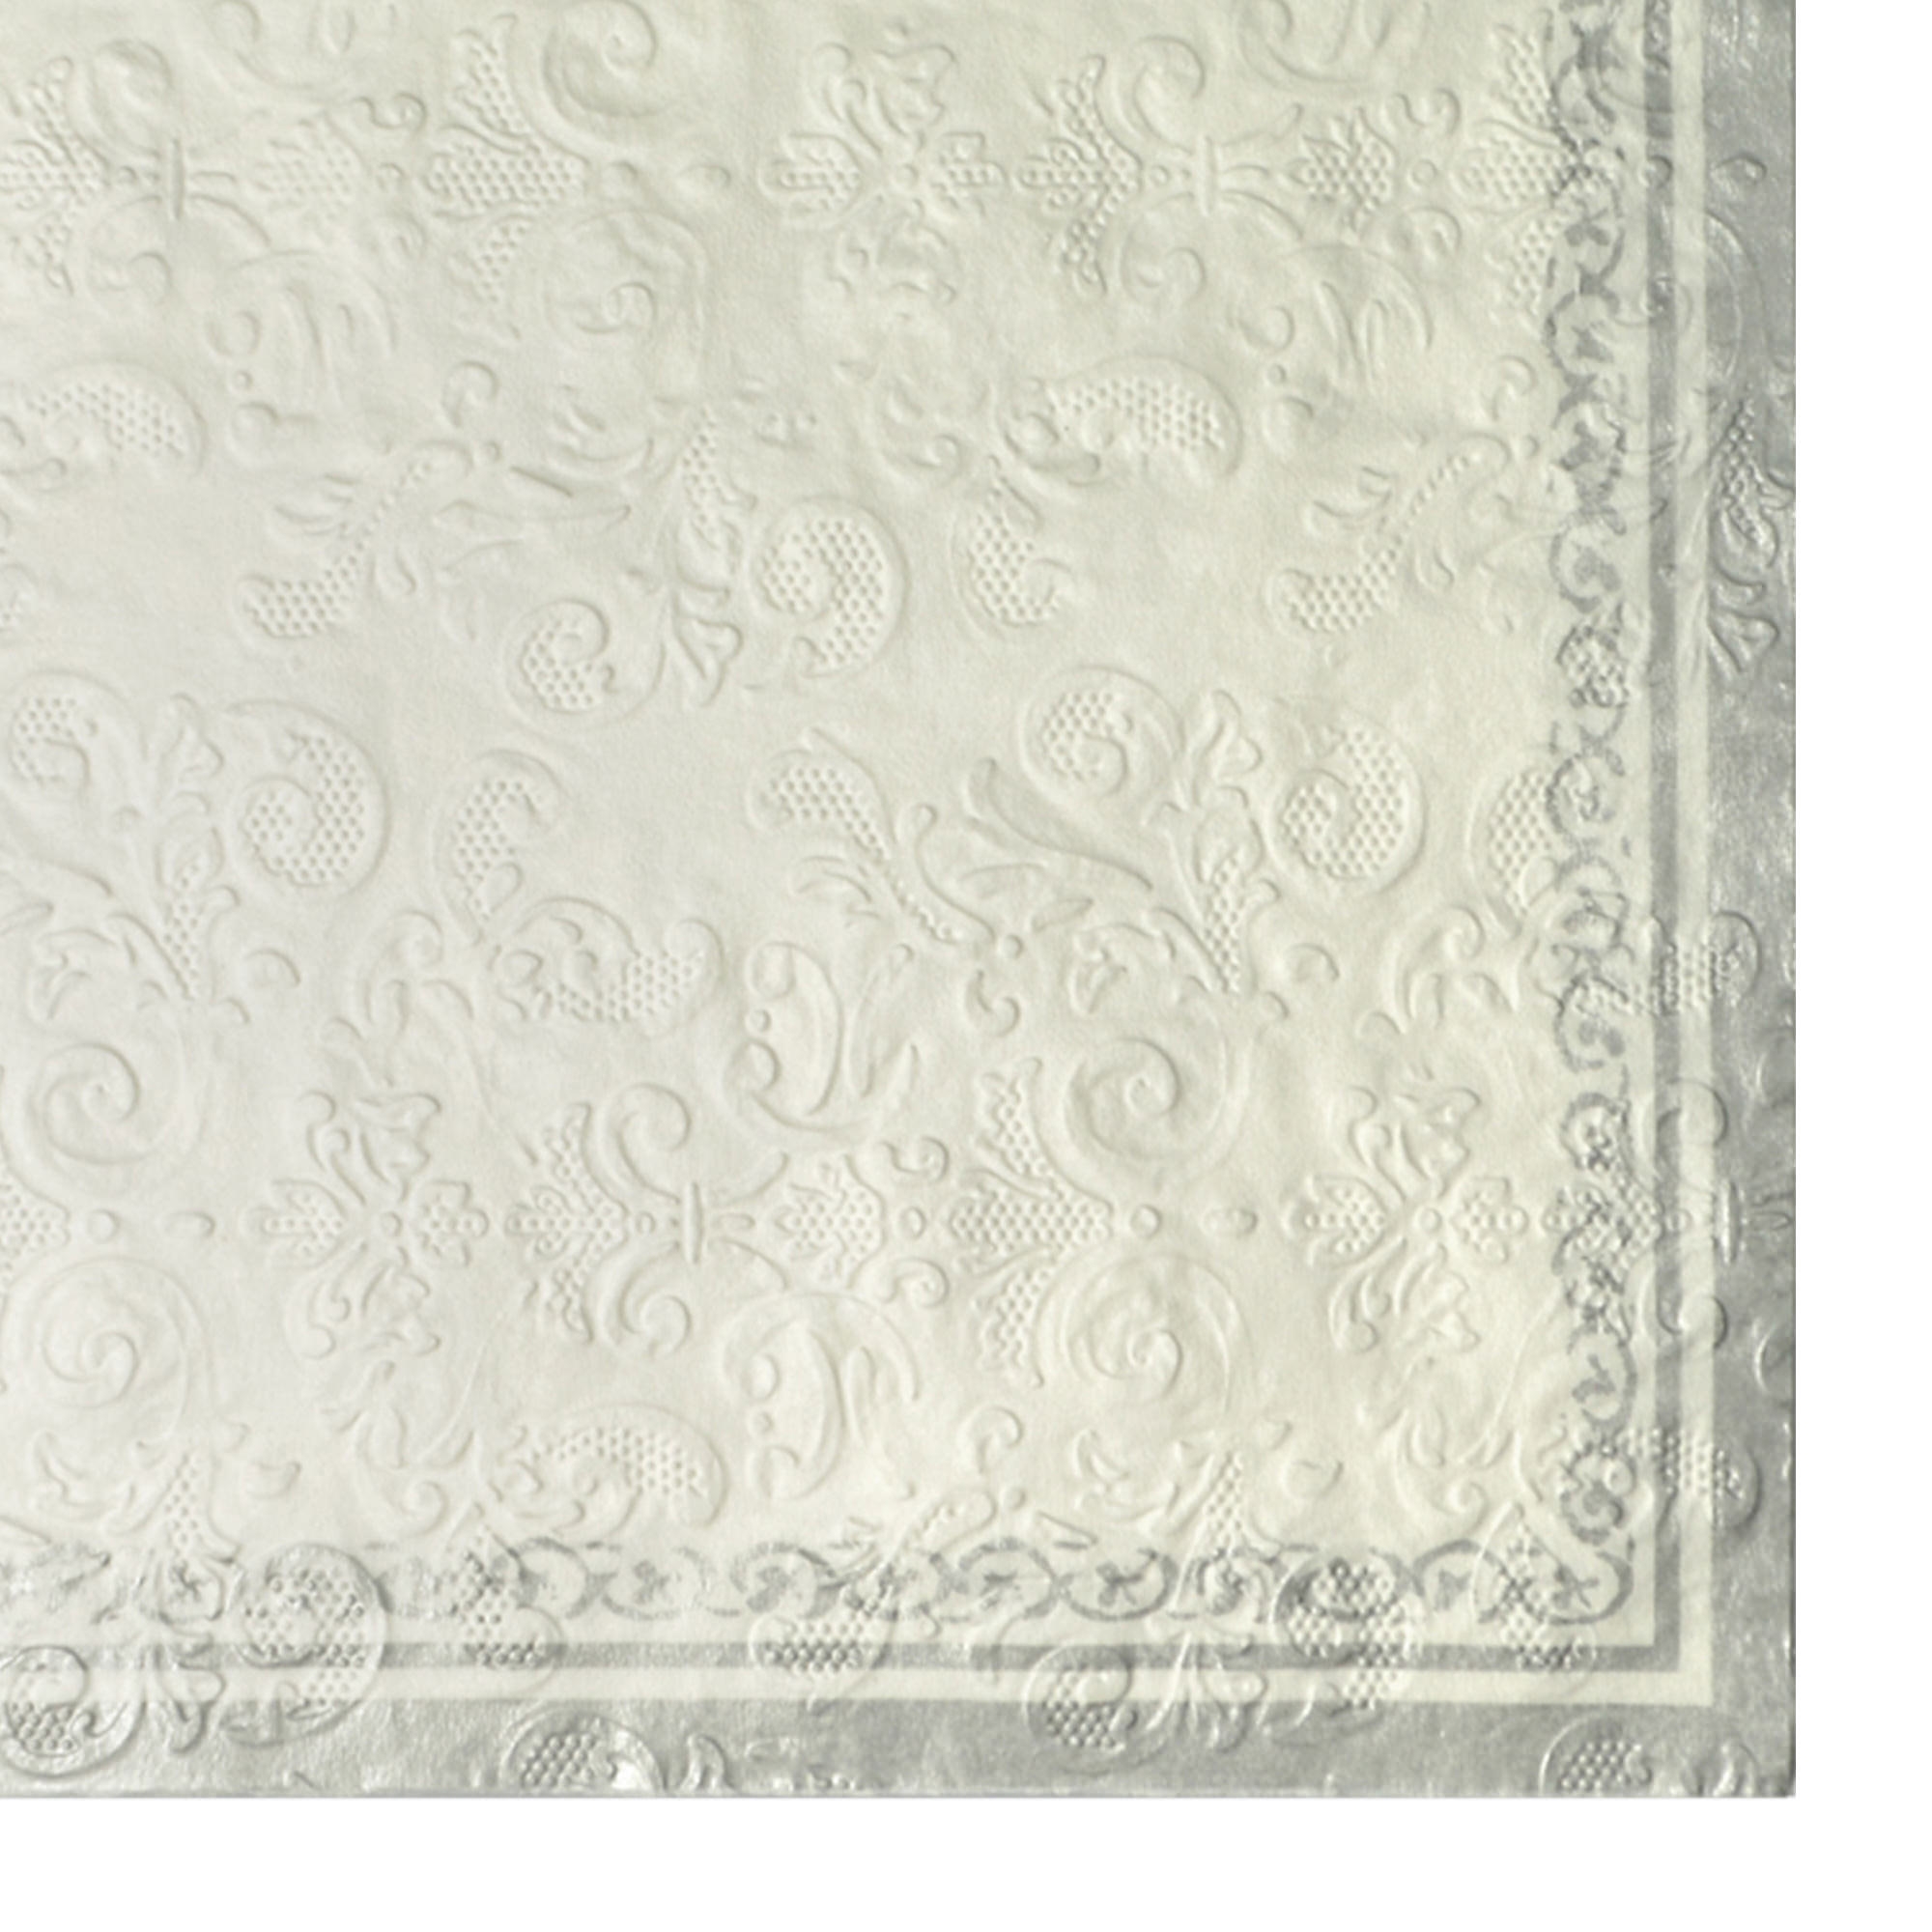 Casa Regalo 3ply Embossed Napkin 20pk White/Silver Image 2